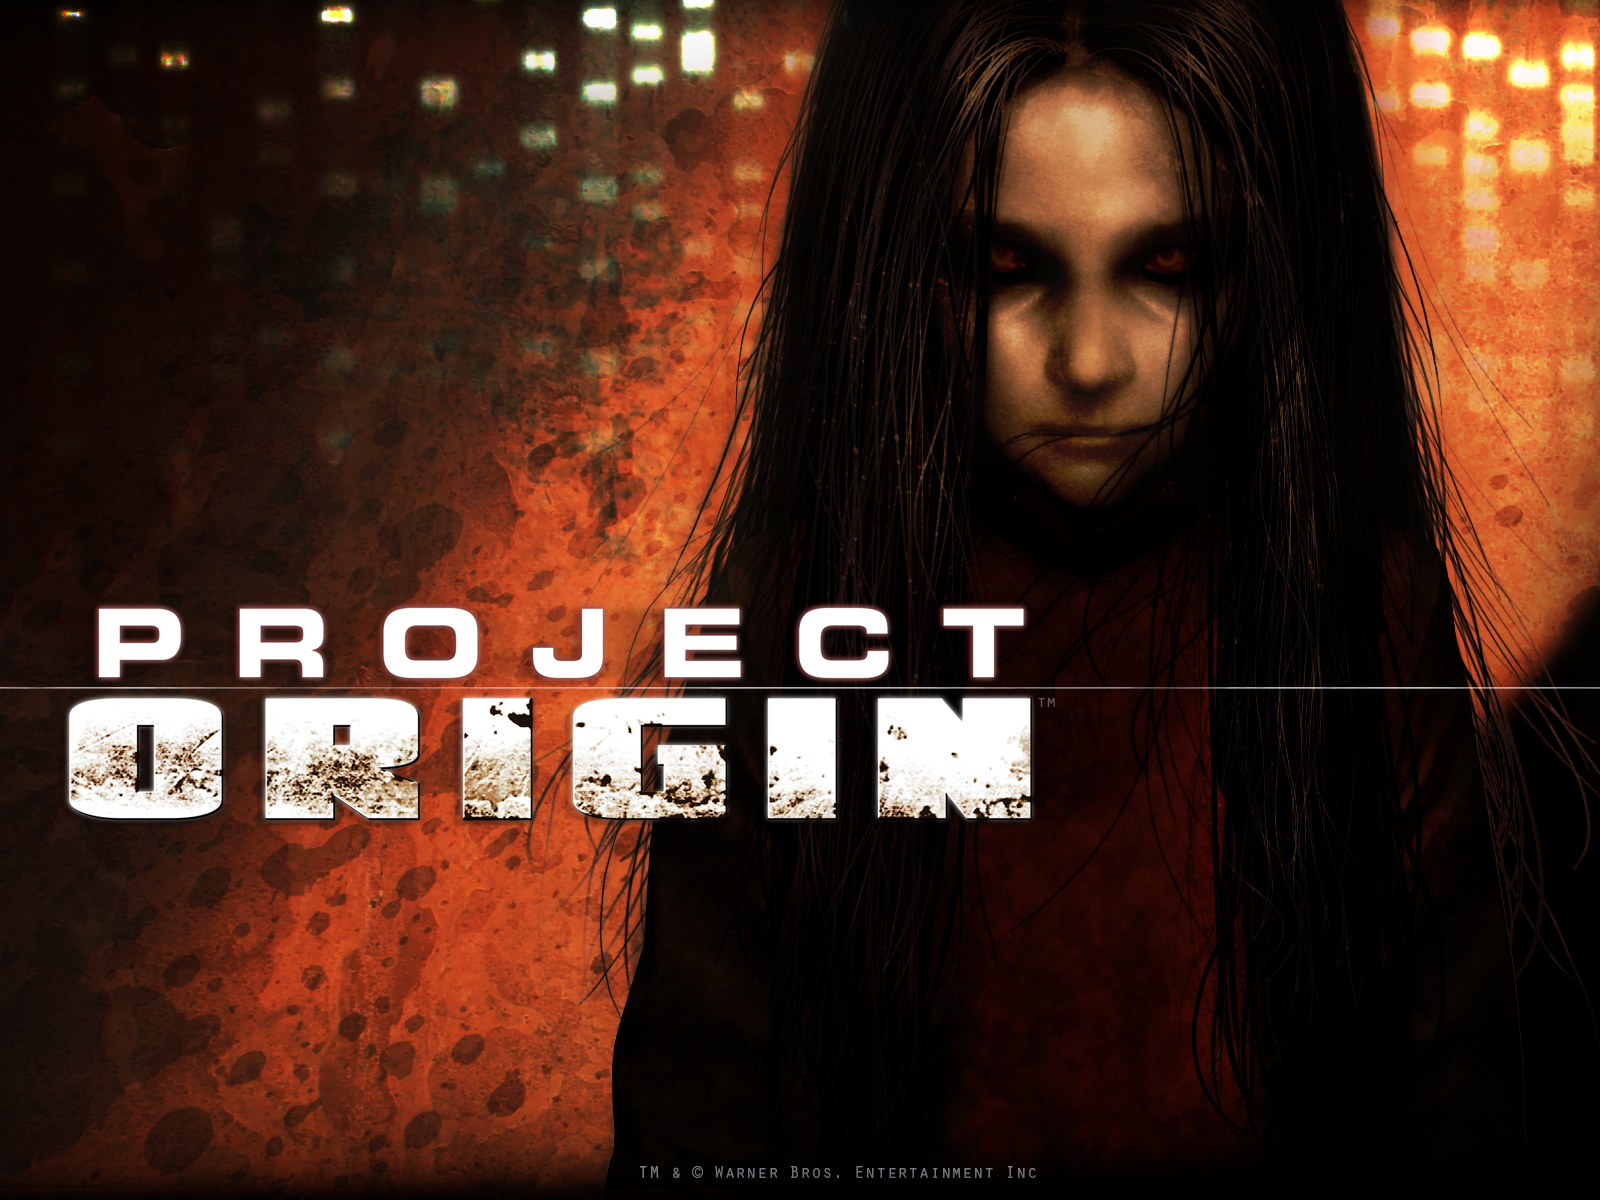 Descargar fondos de escritorio de F E A R 2: Project Origin HD